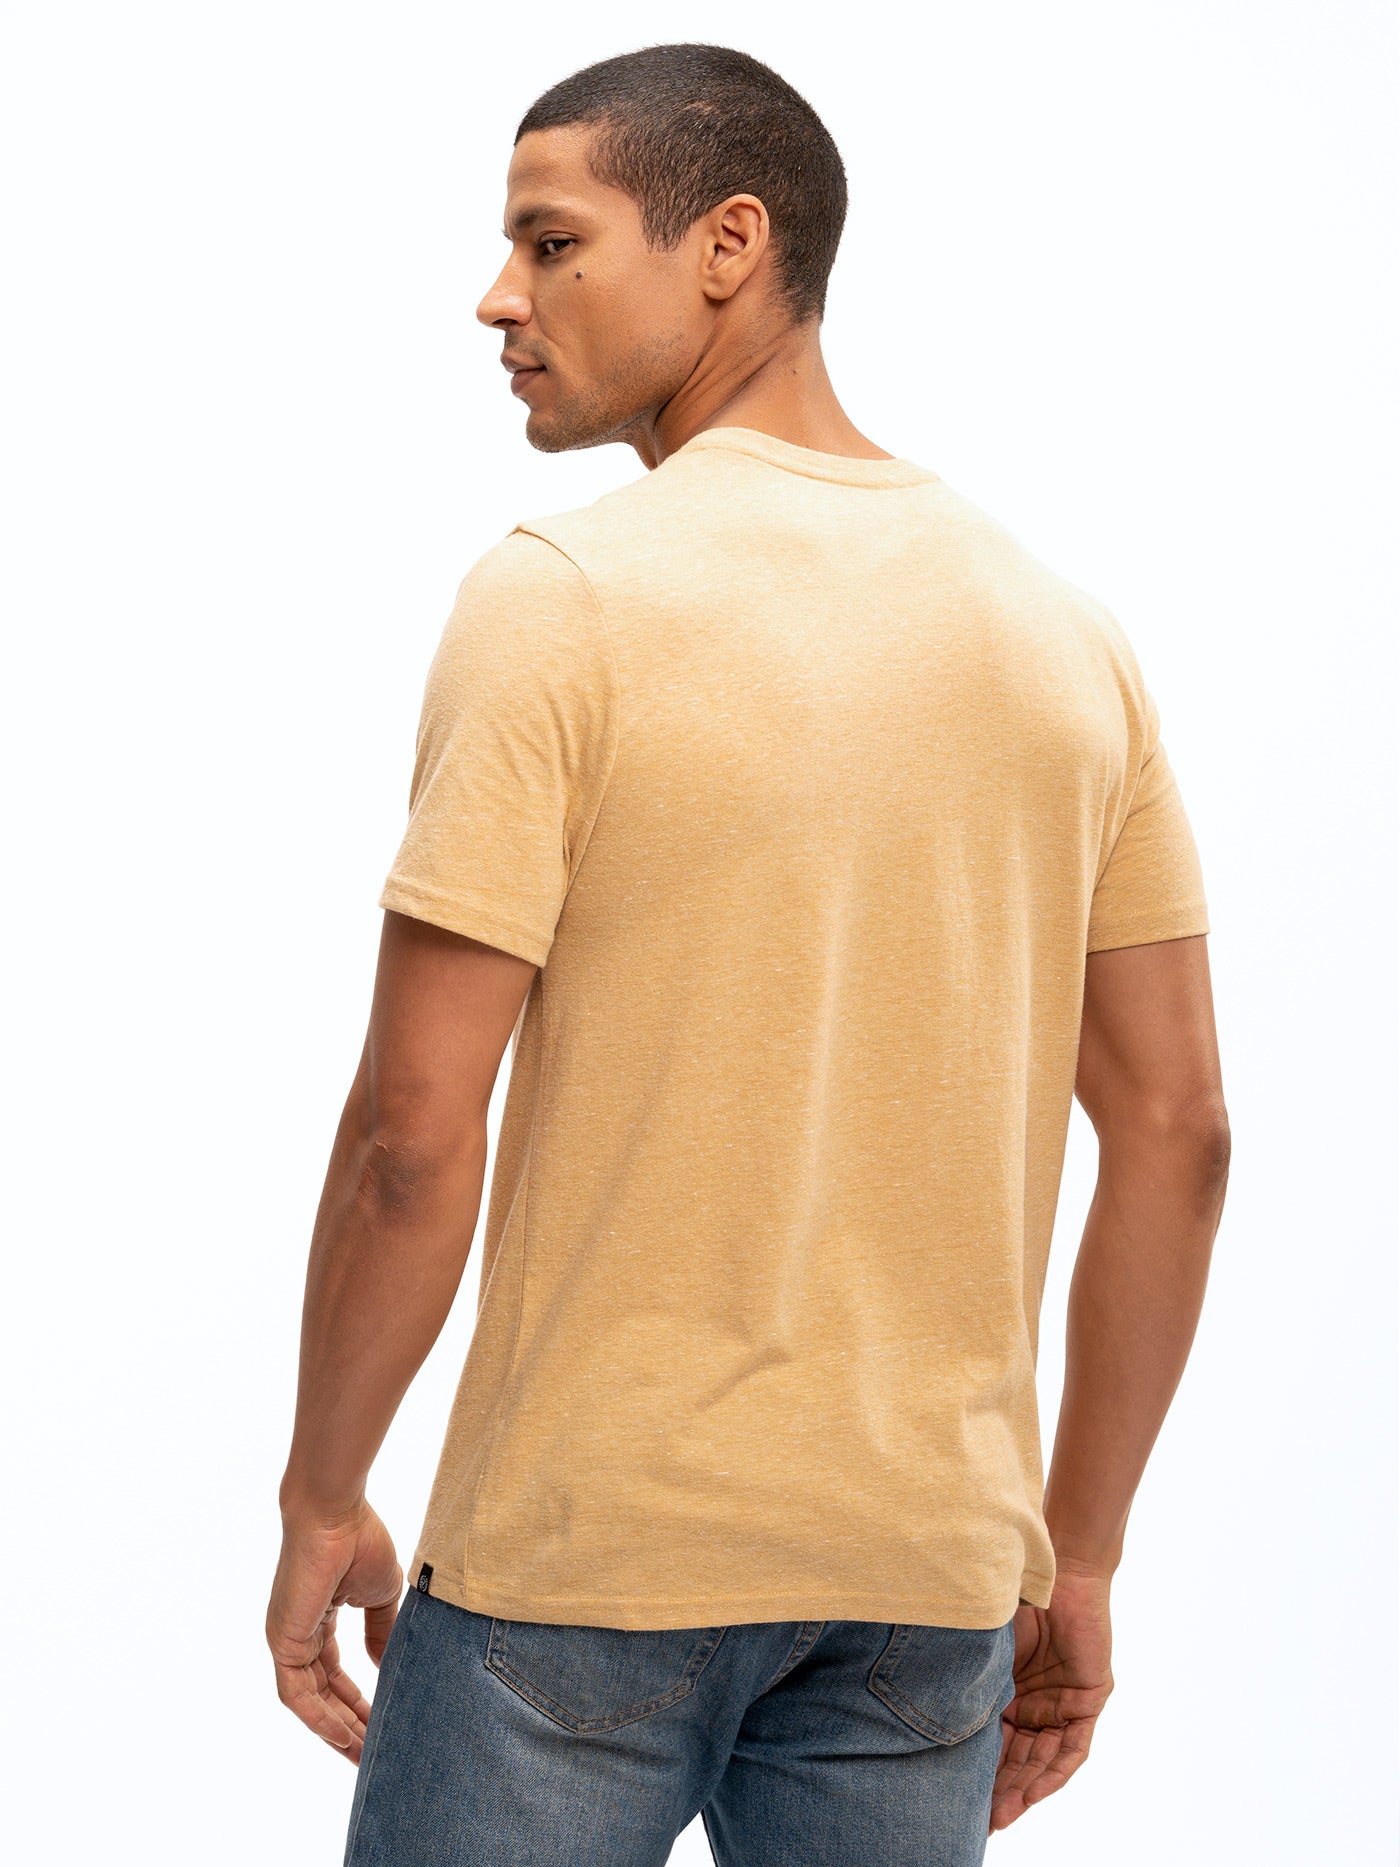 Triblend Short Sleeve V-Neck Tee Mens Tops Tshirt Short Threads 4 Thought 